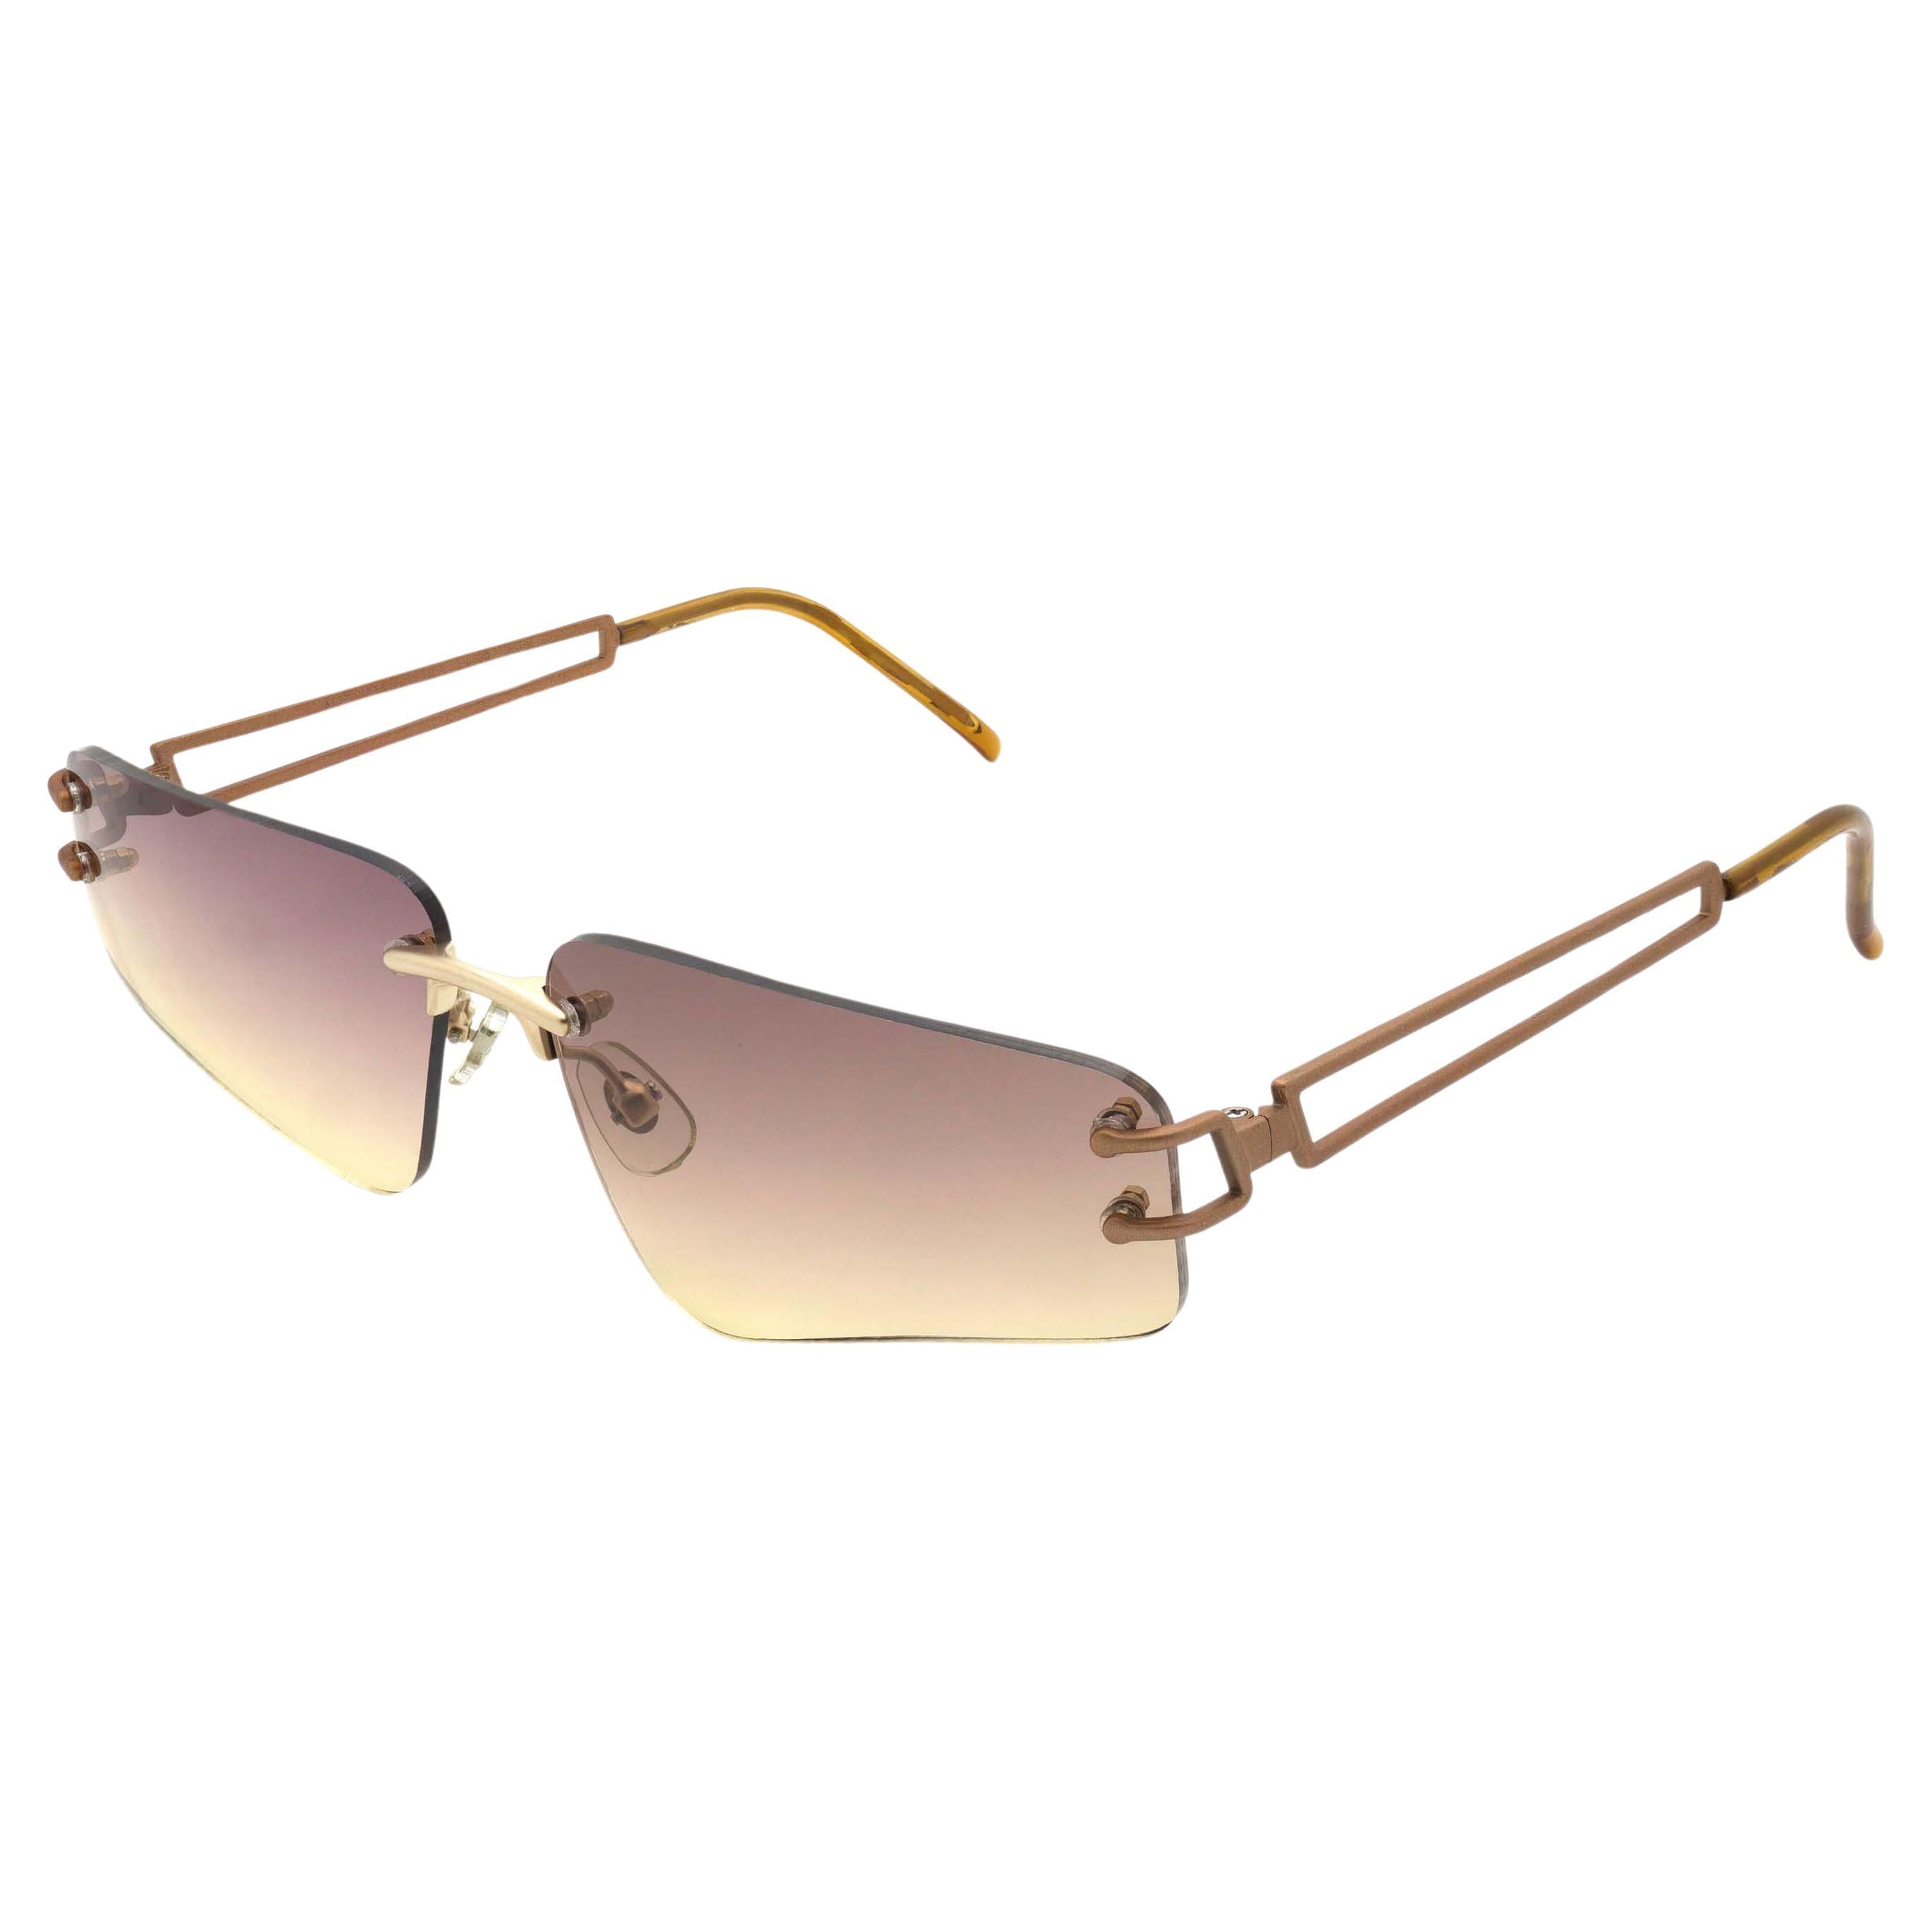 Alexander McQueen Japan vintage sunglasses For Sale